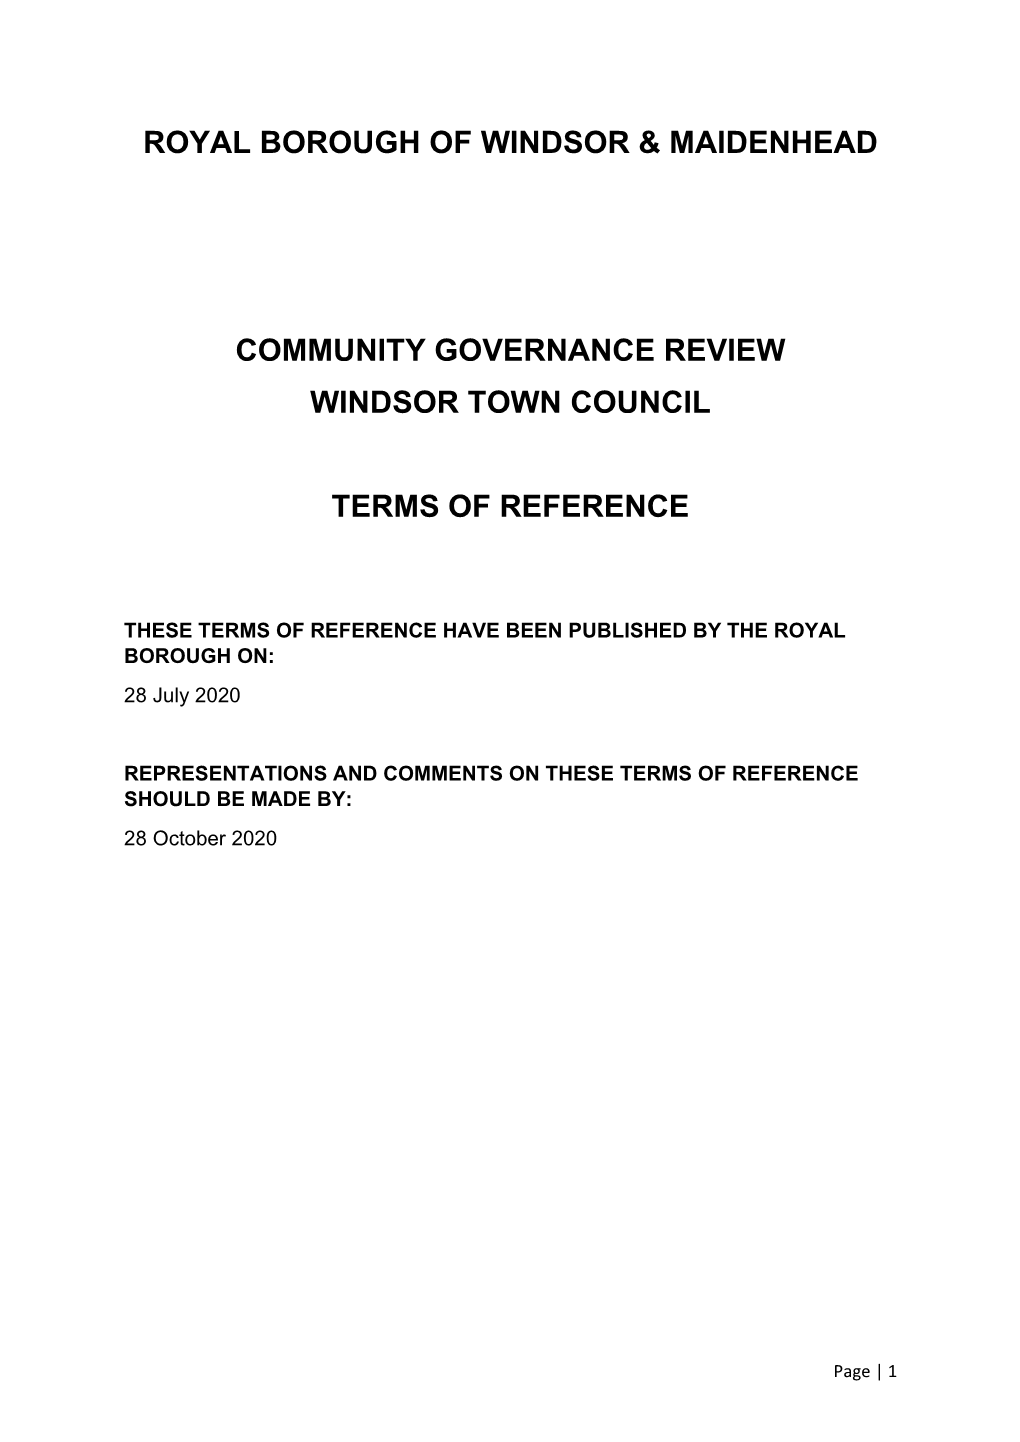 Royal Borough of Windsor & Maidenhead Community